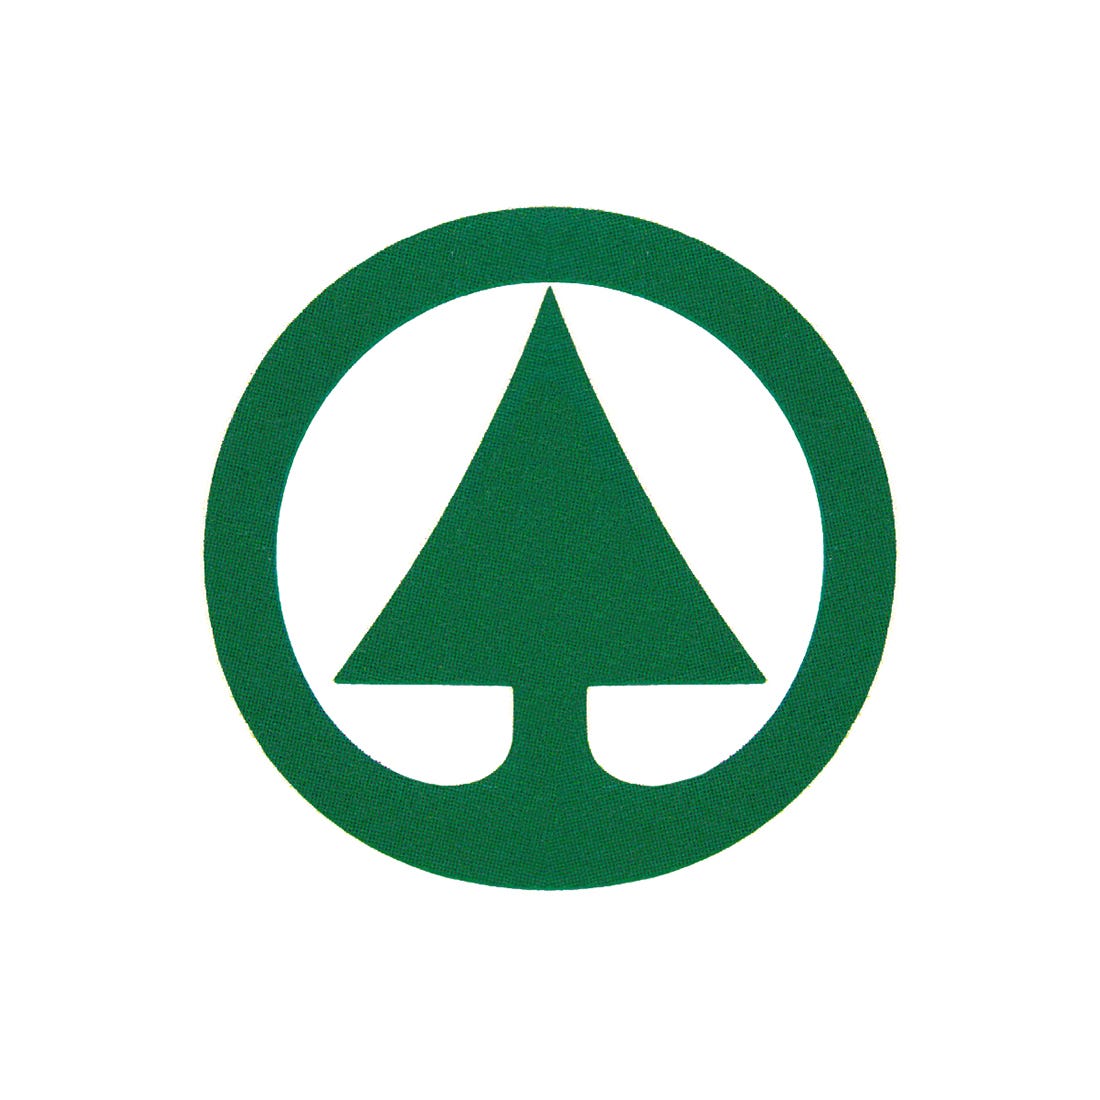 SPAR logo design by Raymond Loewy, 1970, Logo Histories